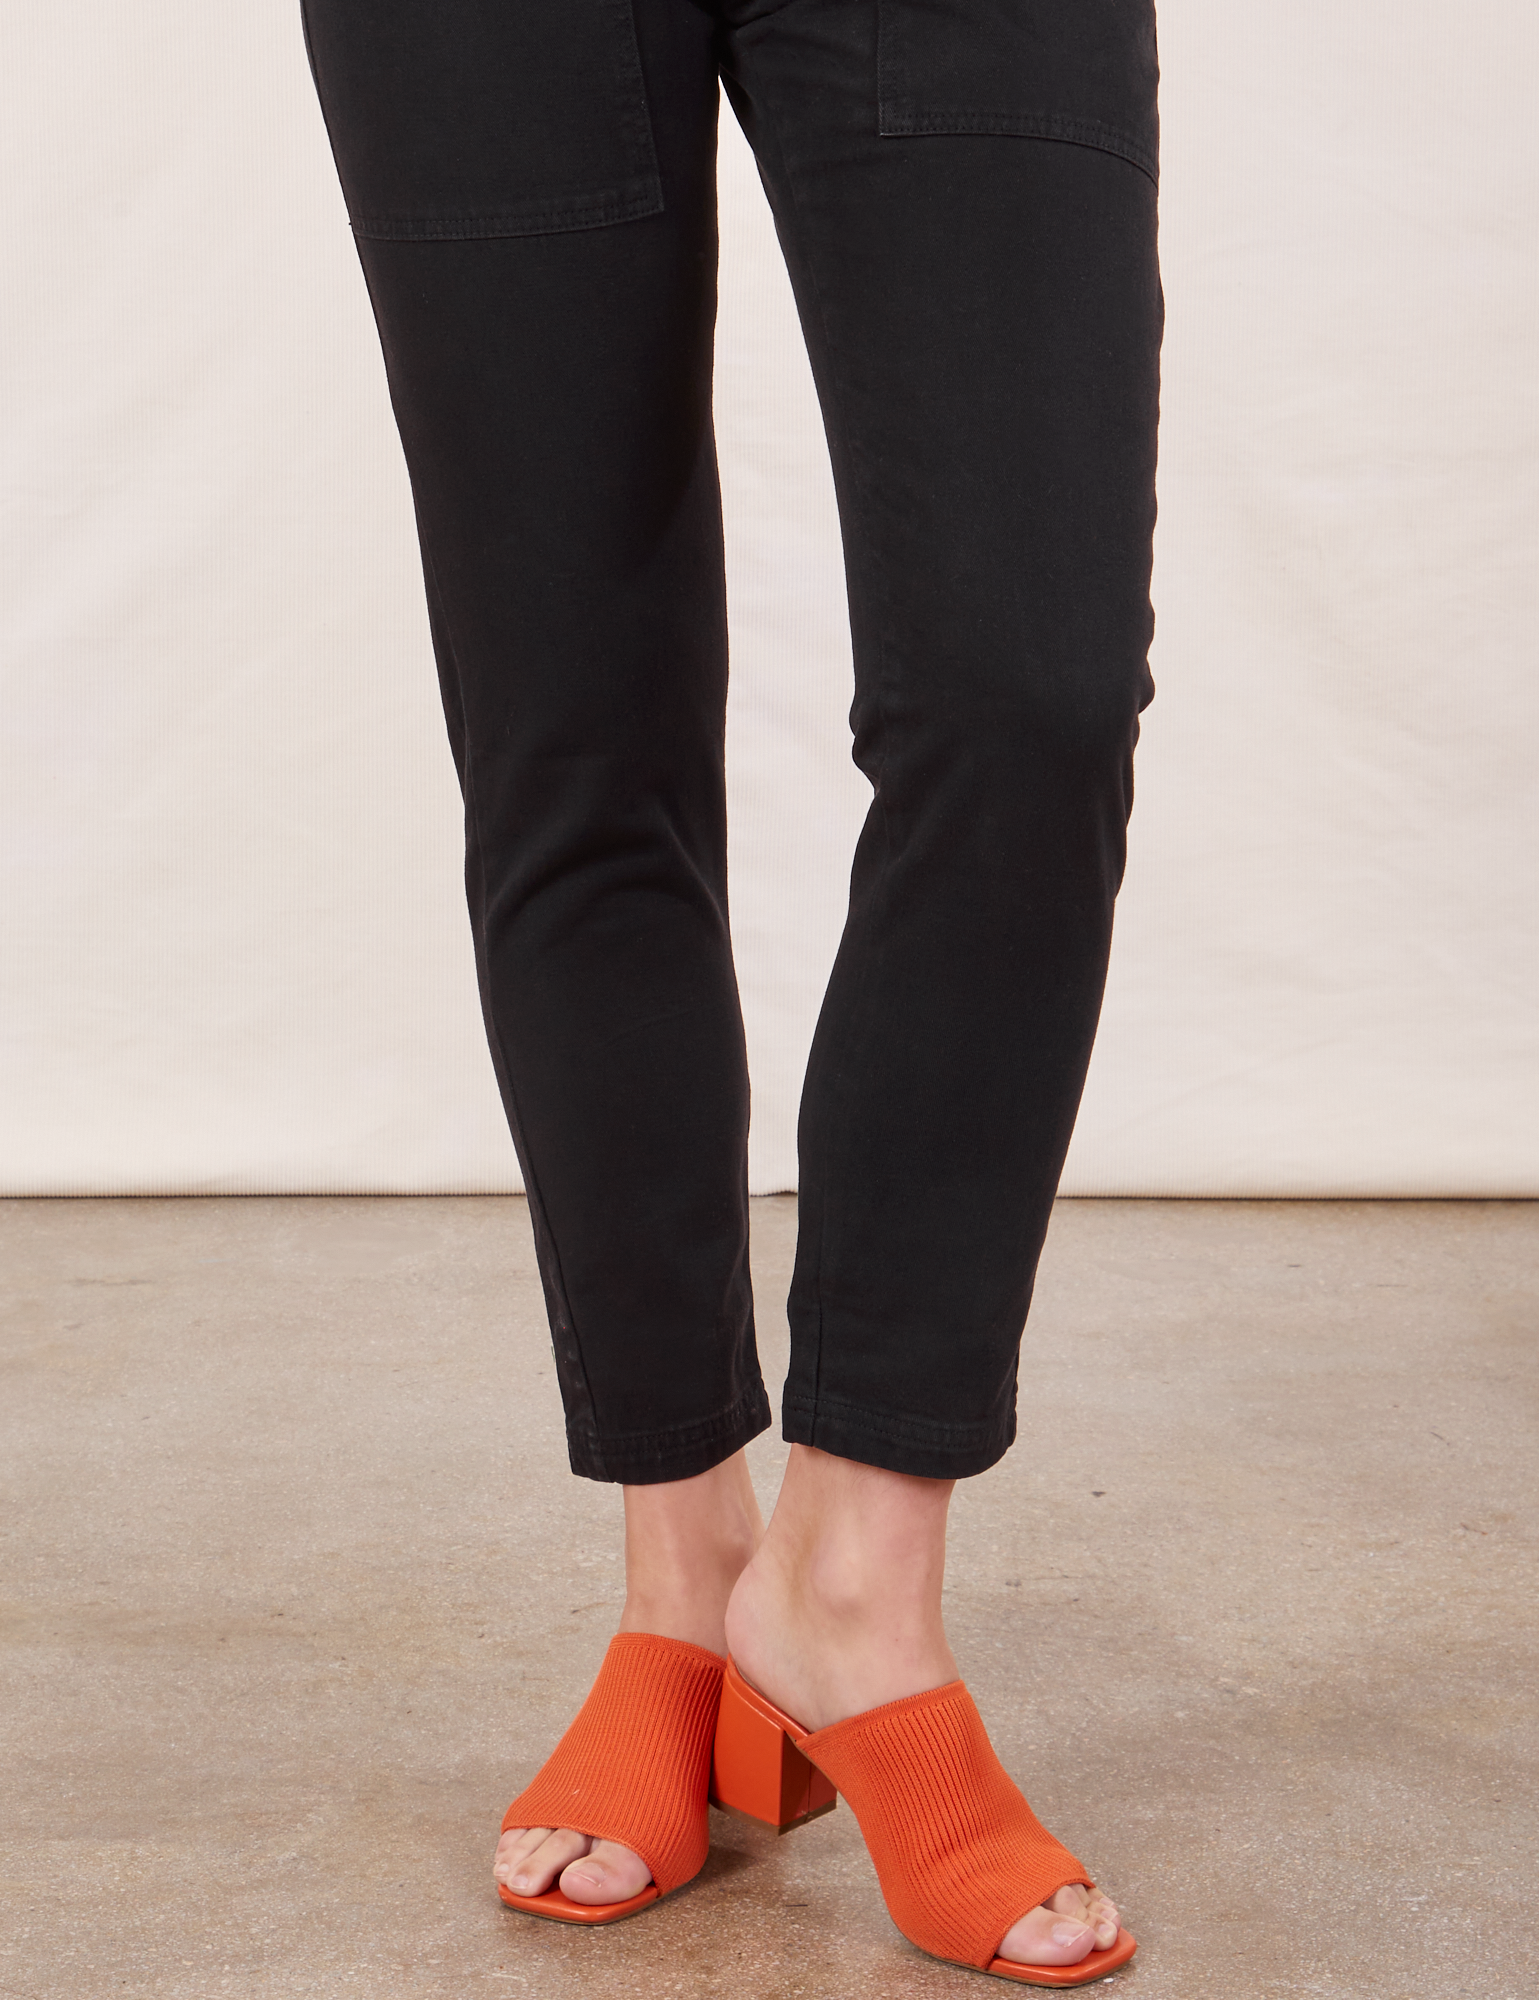 New Pencil Pants Collection Drop 😍 ✨ Buttoned PENCIL PANTS